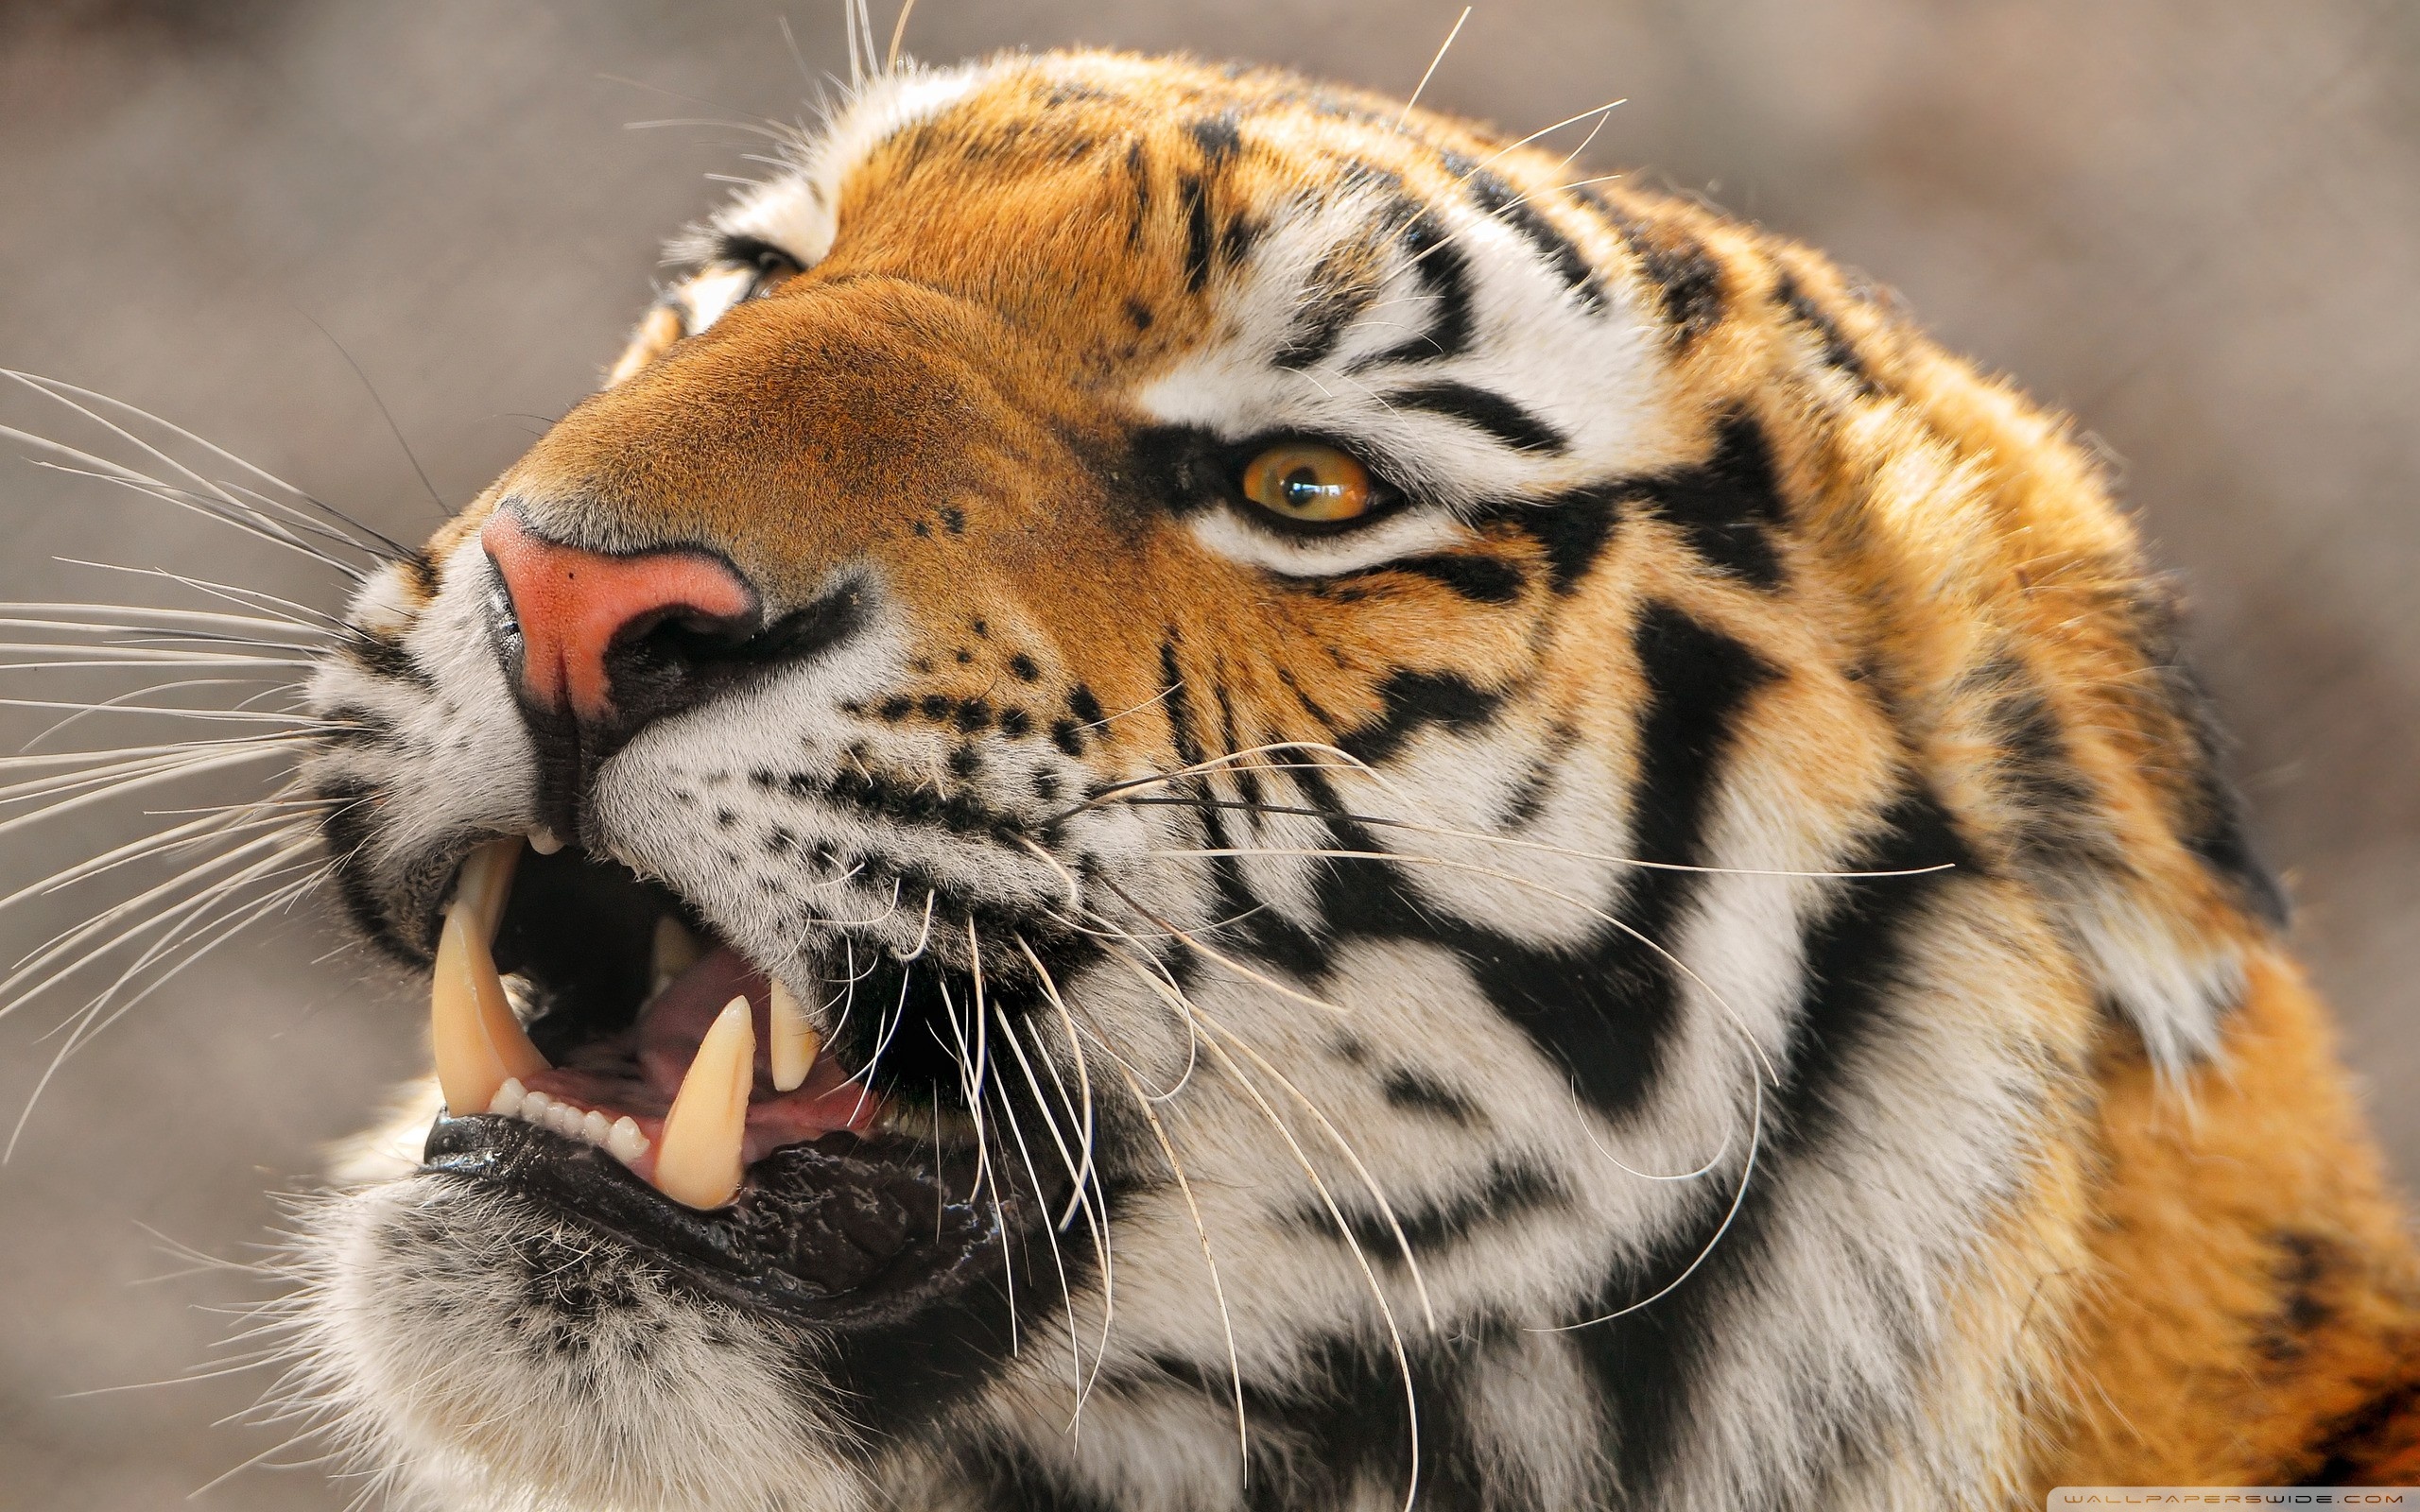 Tiger Roaring ❤ 4K HD Desktop Wallpaper for 4K Ultra HD TV